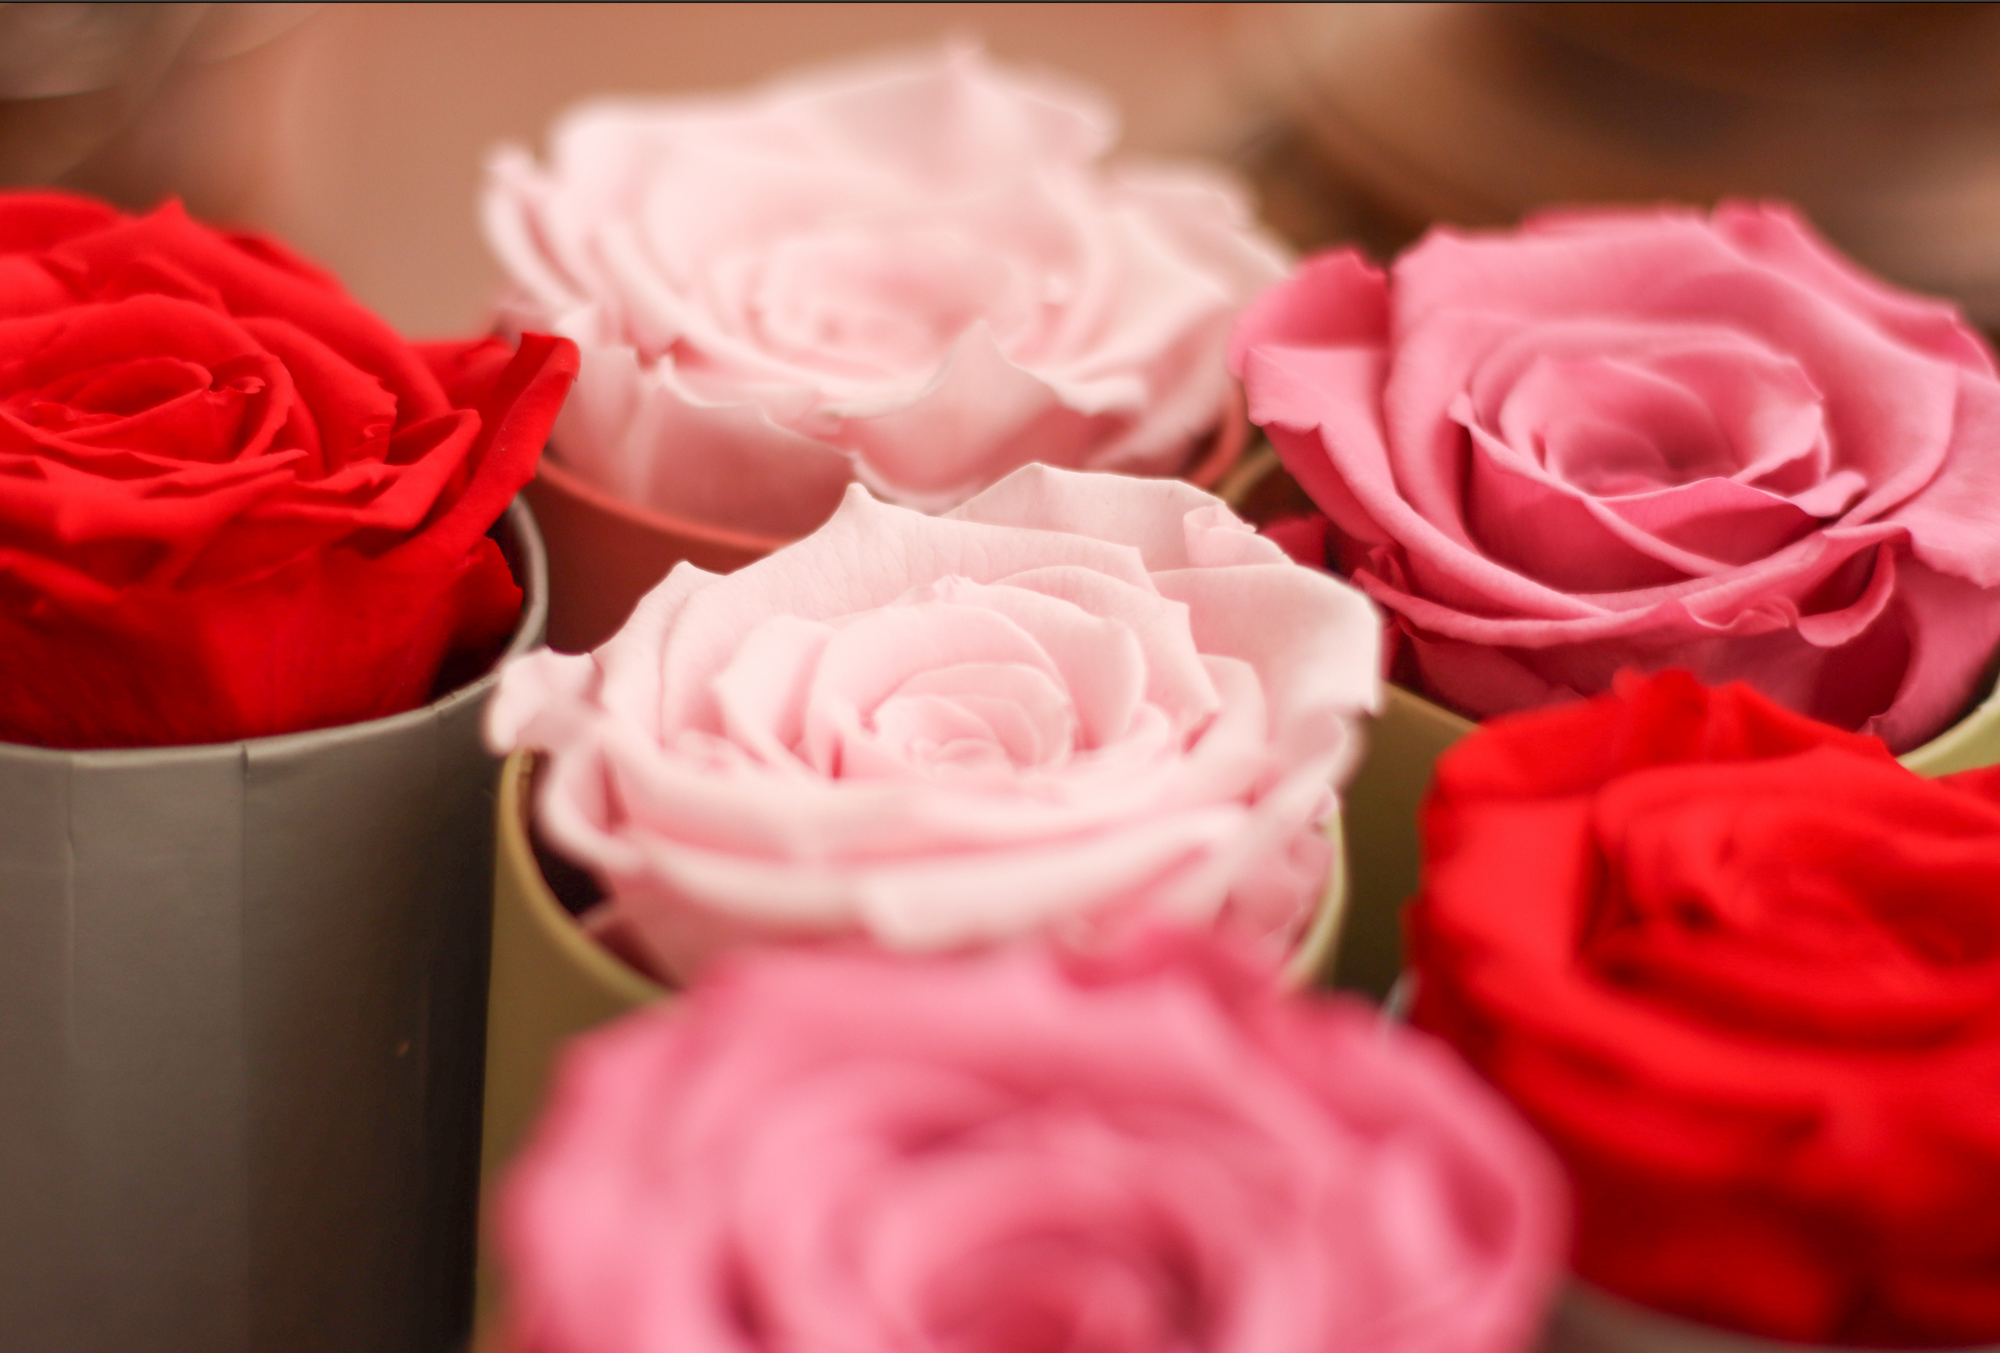 Comprar flores eternas - Roses to Love